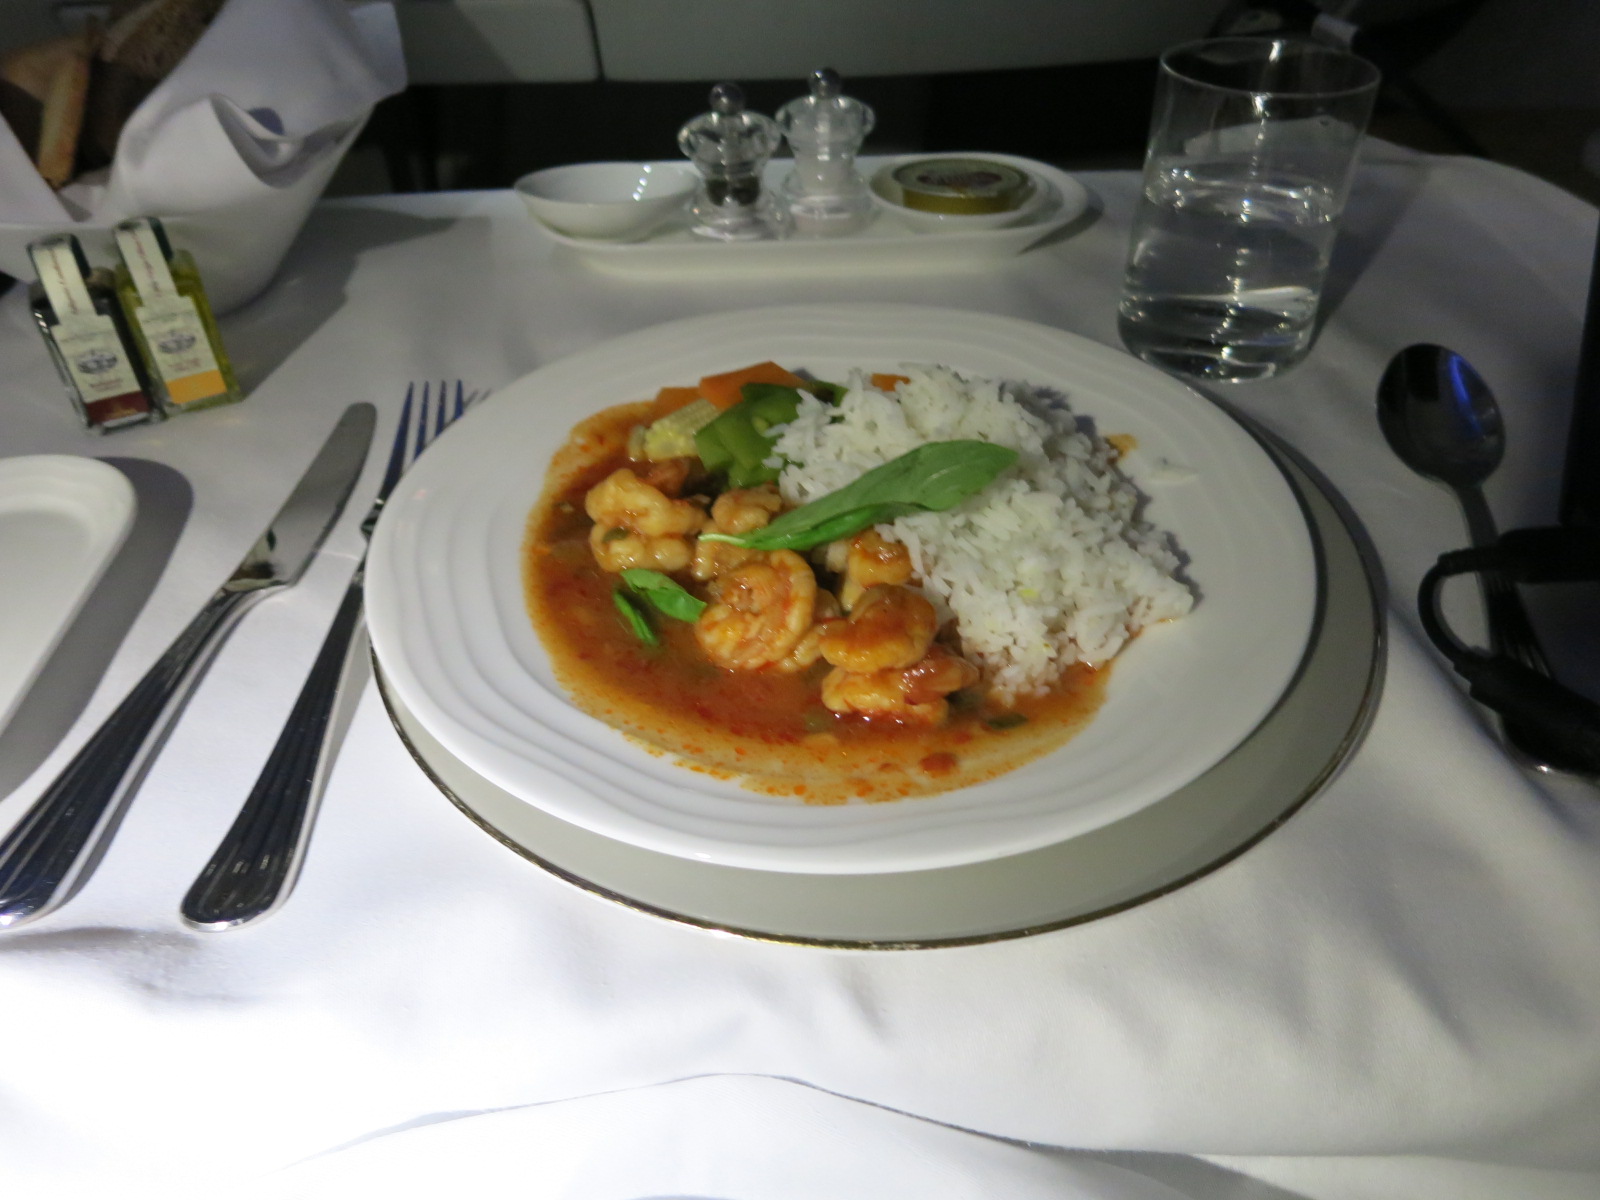 Emirates first class a380 Dubai Bangkok dinner service curry